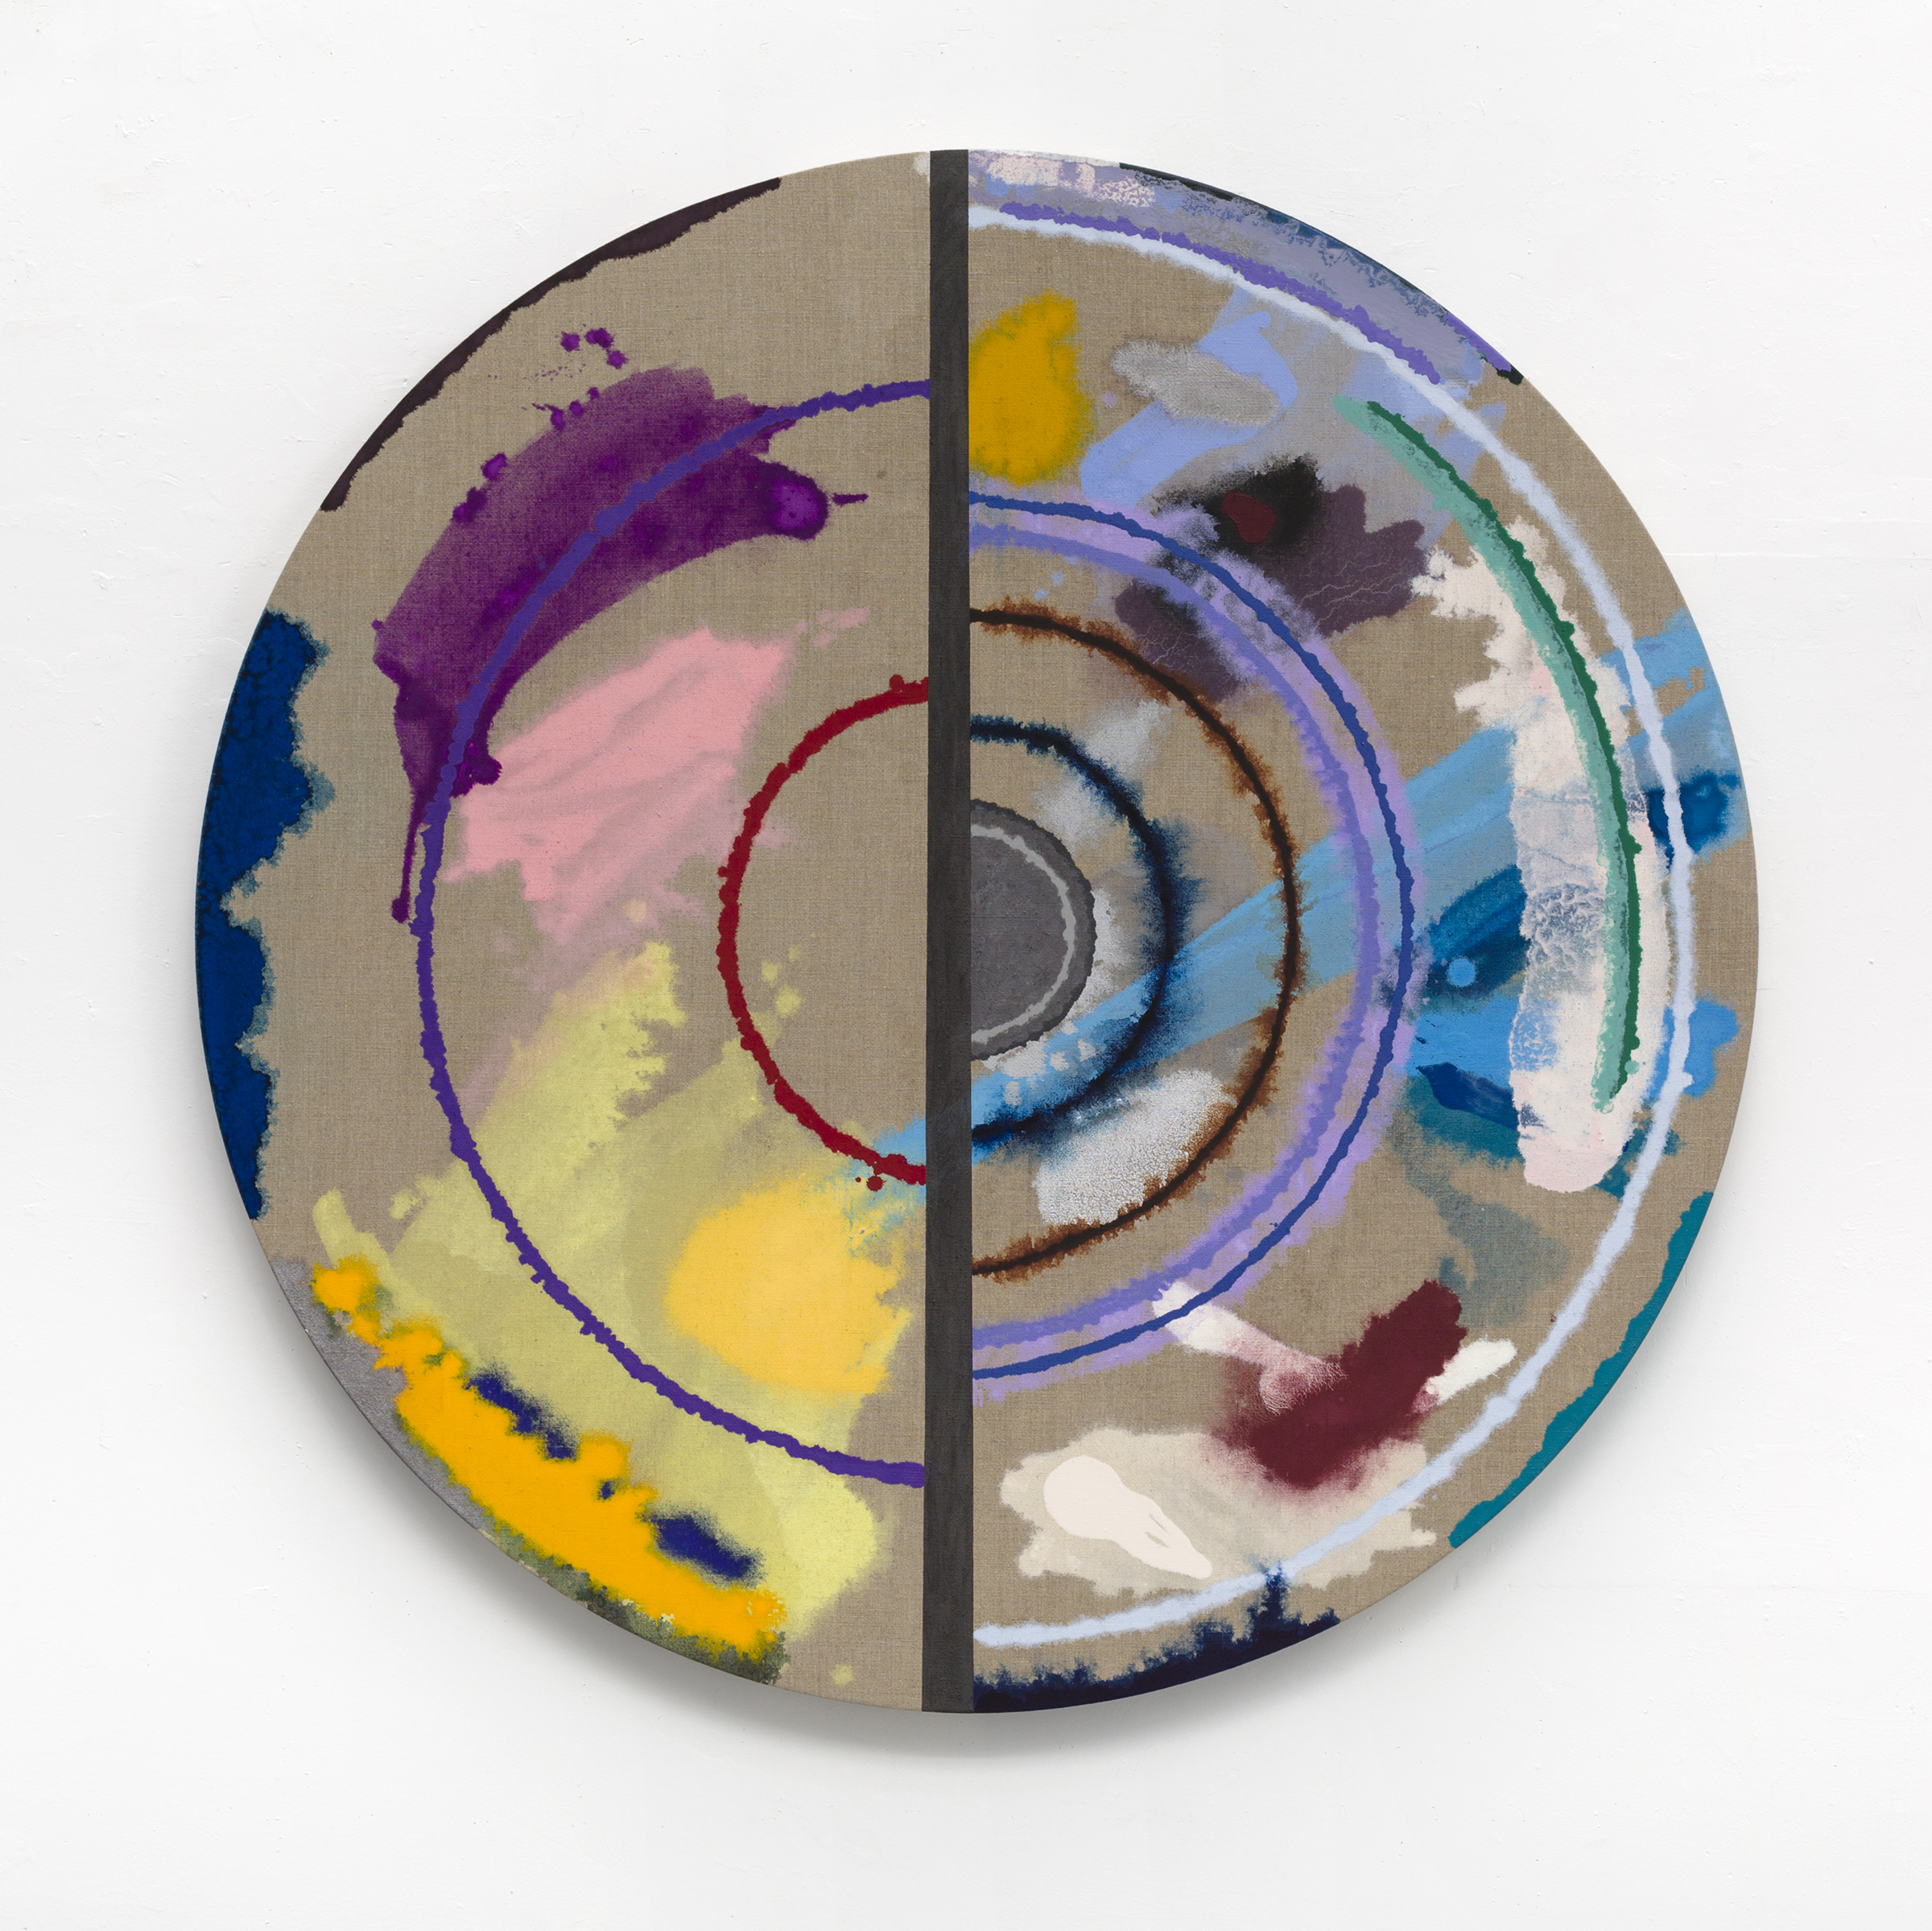   PAMELA JORDEN   Cut Target , 2016, oil and graphite on linen, 52" diameter   